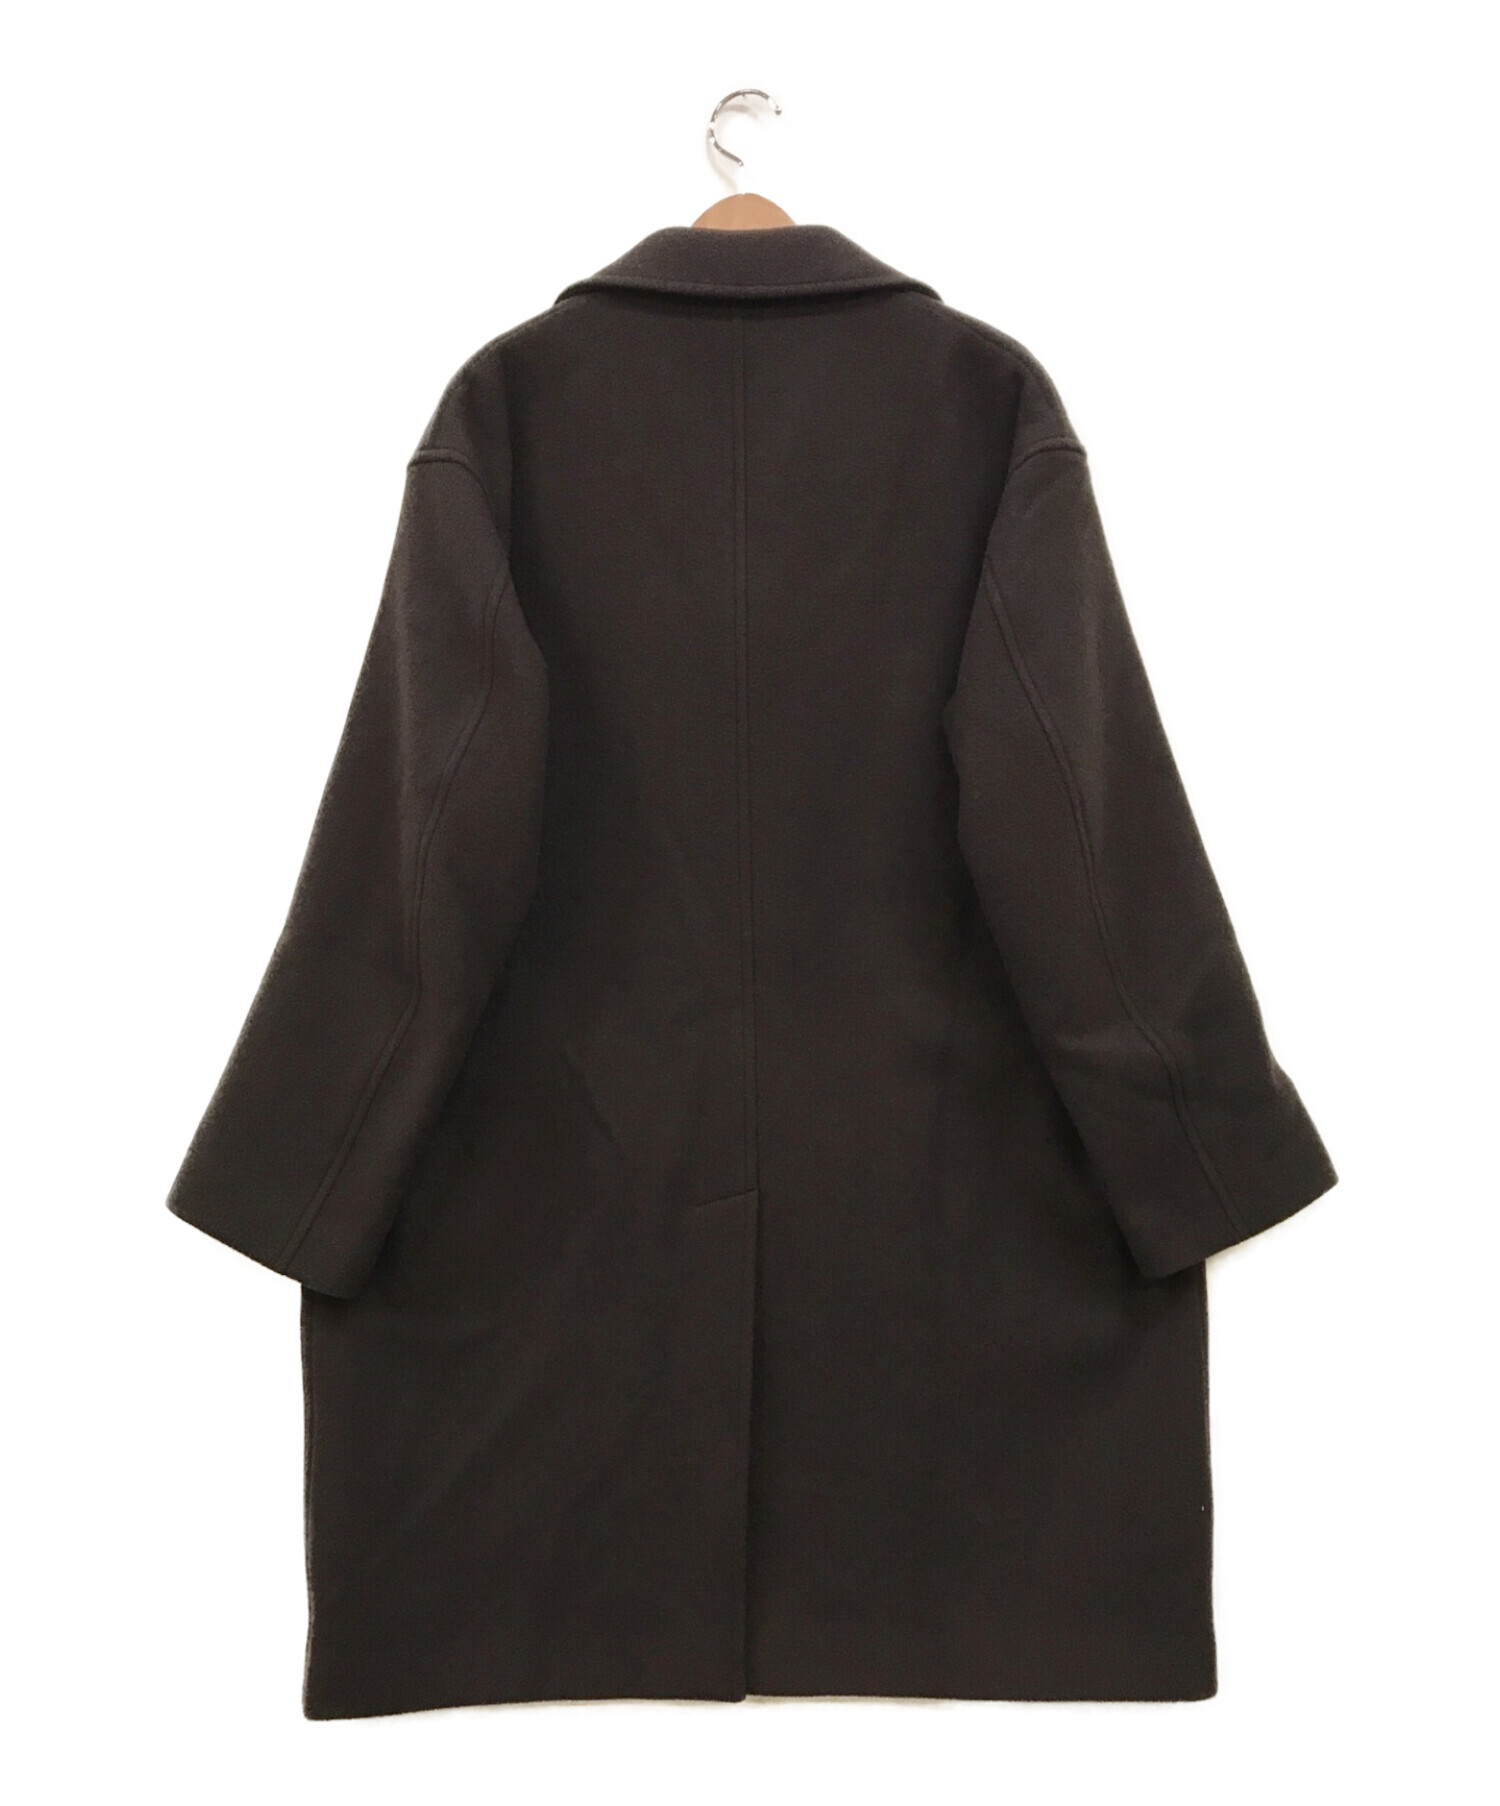 AURALEE (オーラリー) DOUBLE CLOTH LIGHT MELTON SOUTIEN COLLAR COAT ブラウン サイズ:3